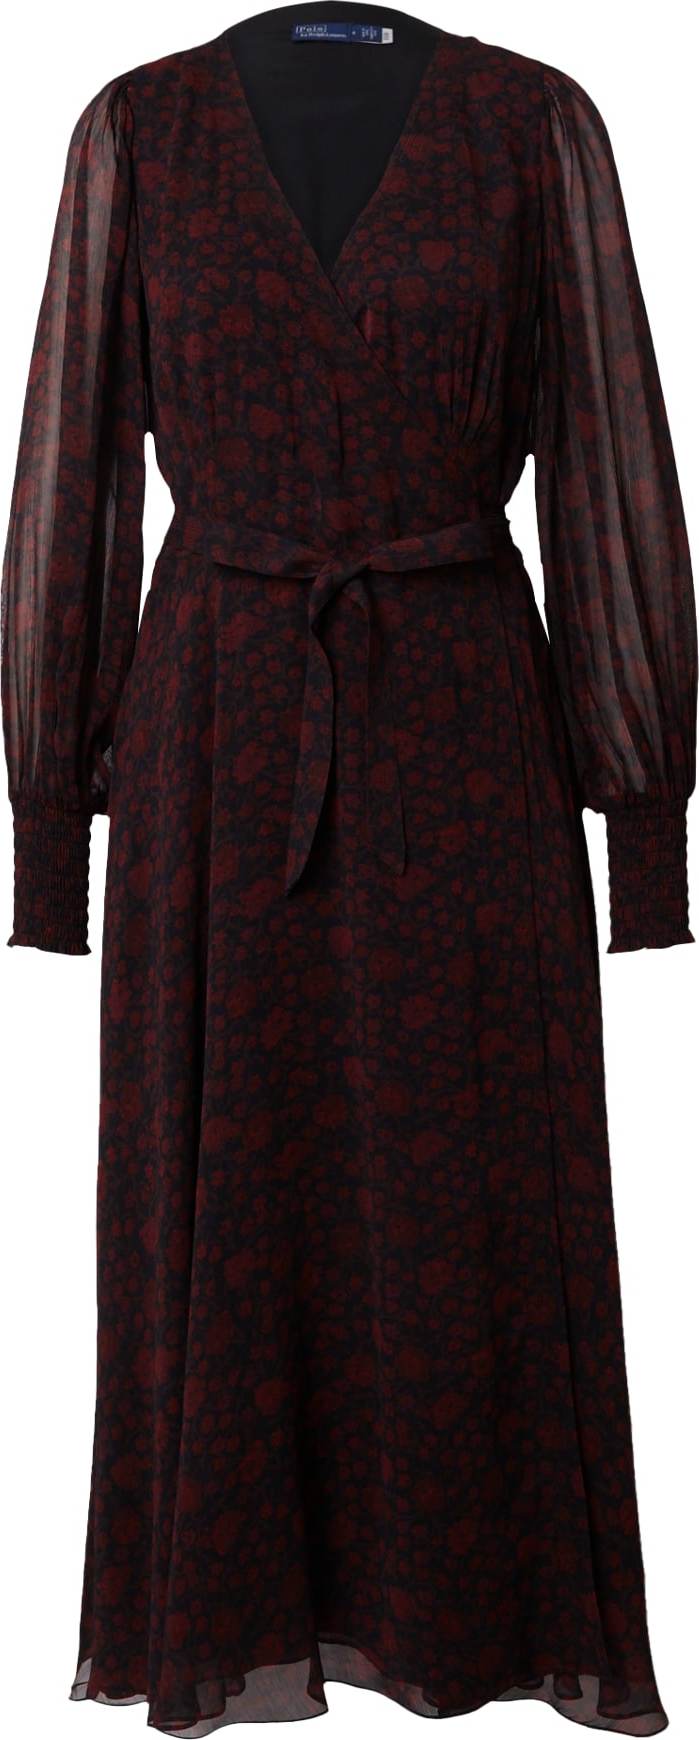 Šaty 'TLIA' Polo Ralph Lauren hnědá / burgundská červeň / černá